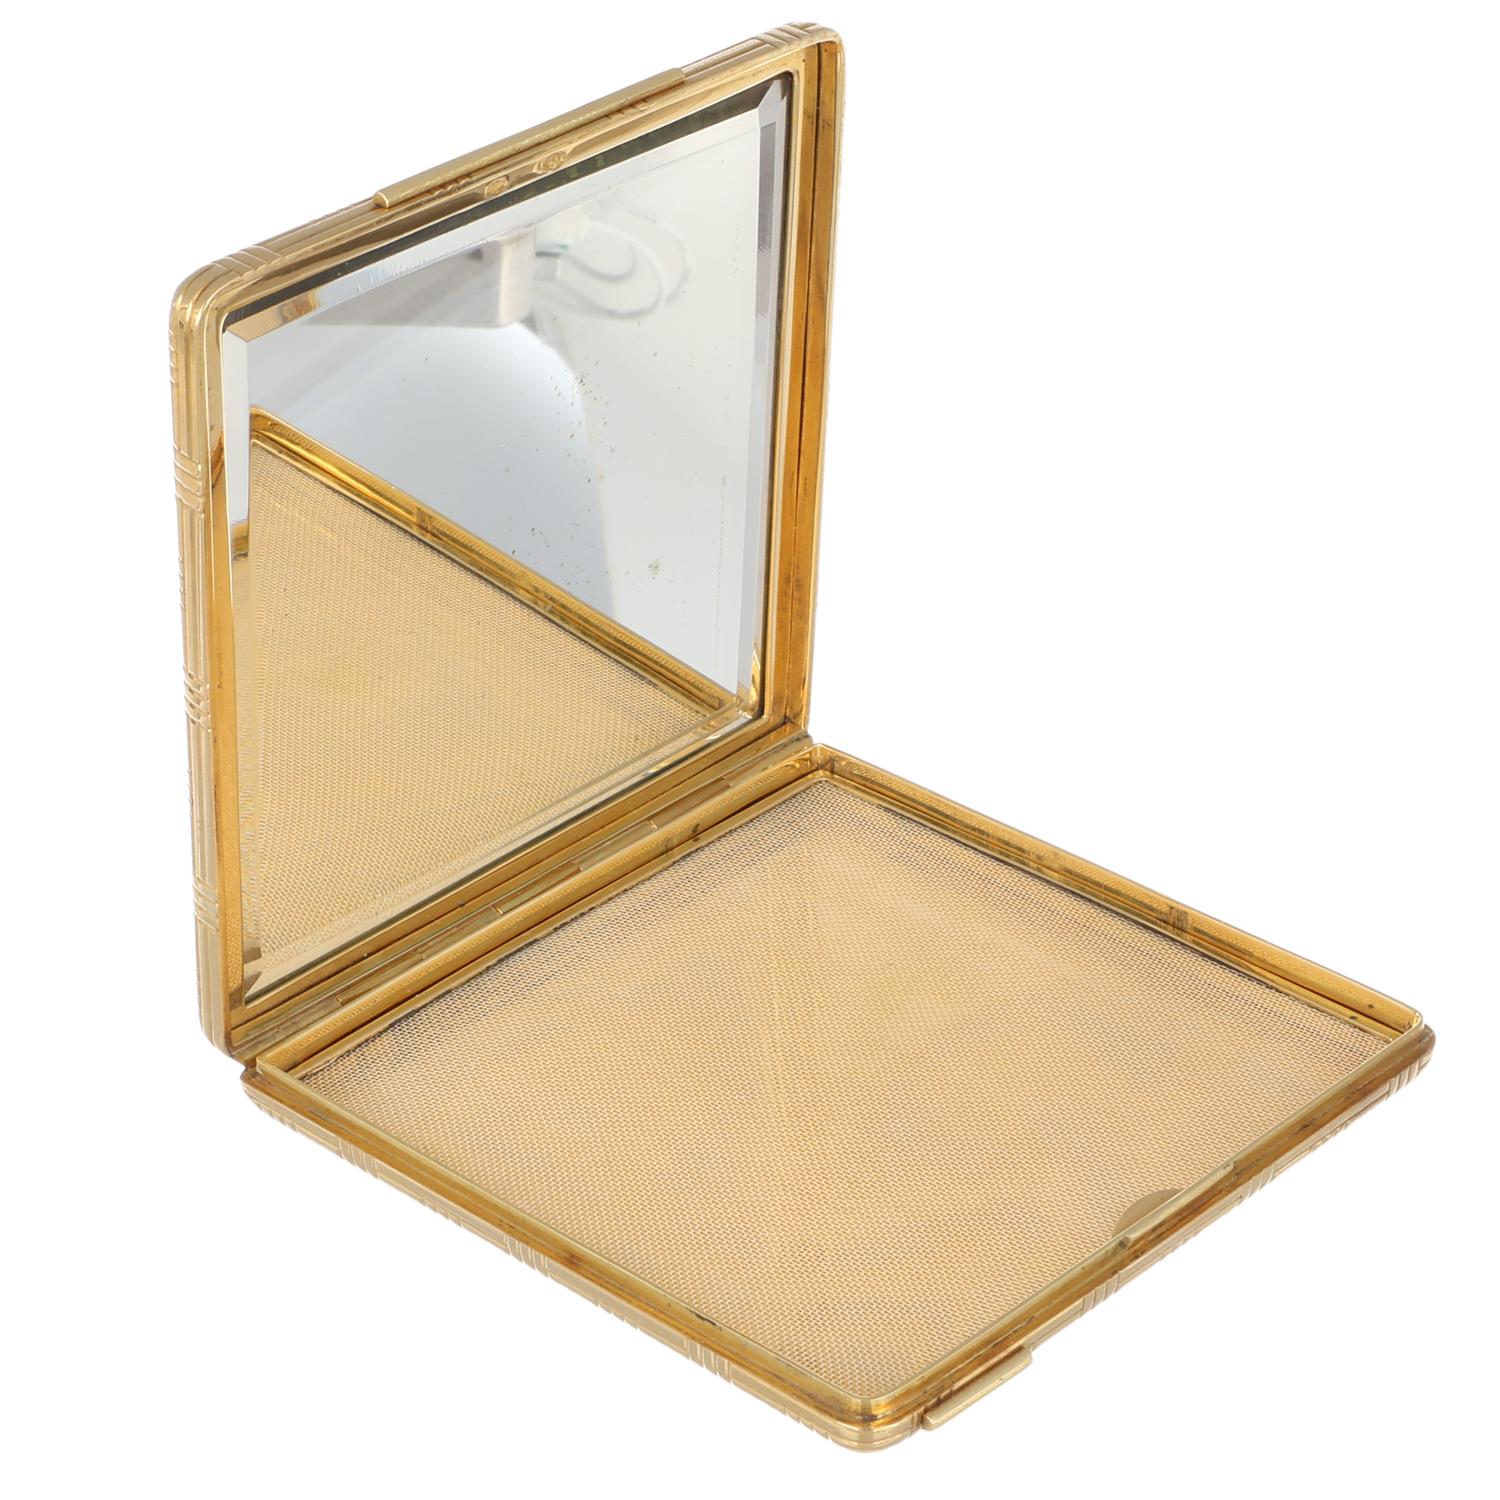 18Kt Gold Seltene kompakte Puderdose - Made in Italy 1970 circa - Geometrisches Muster im Angebot 2